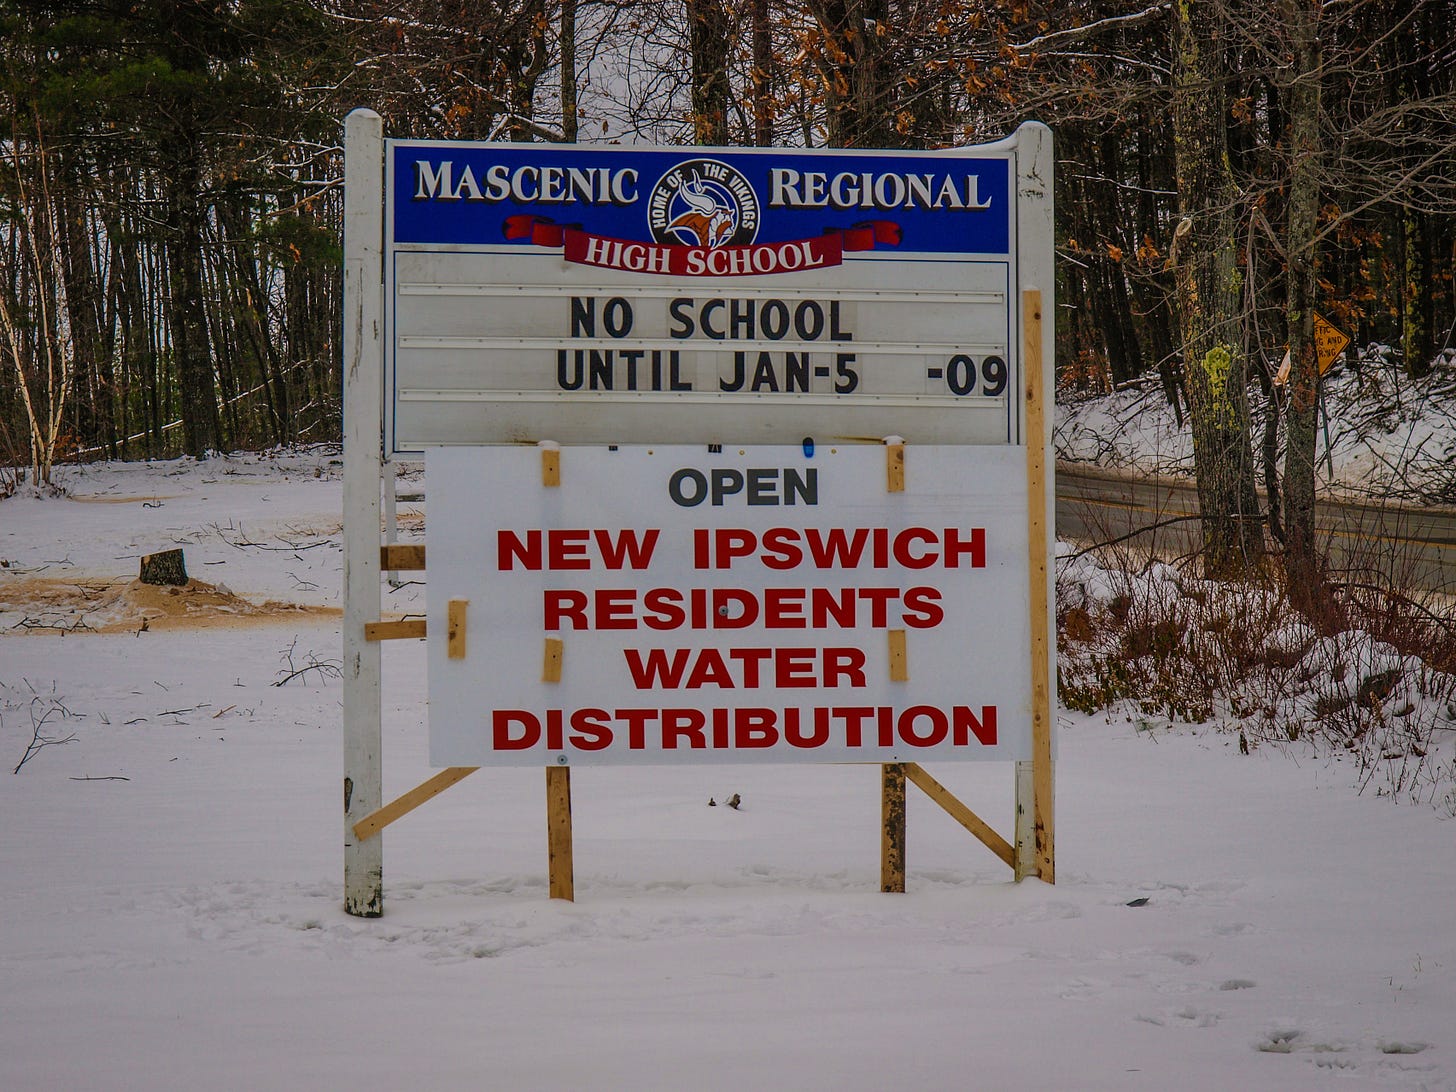 Mascenic Regional High School sign